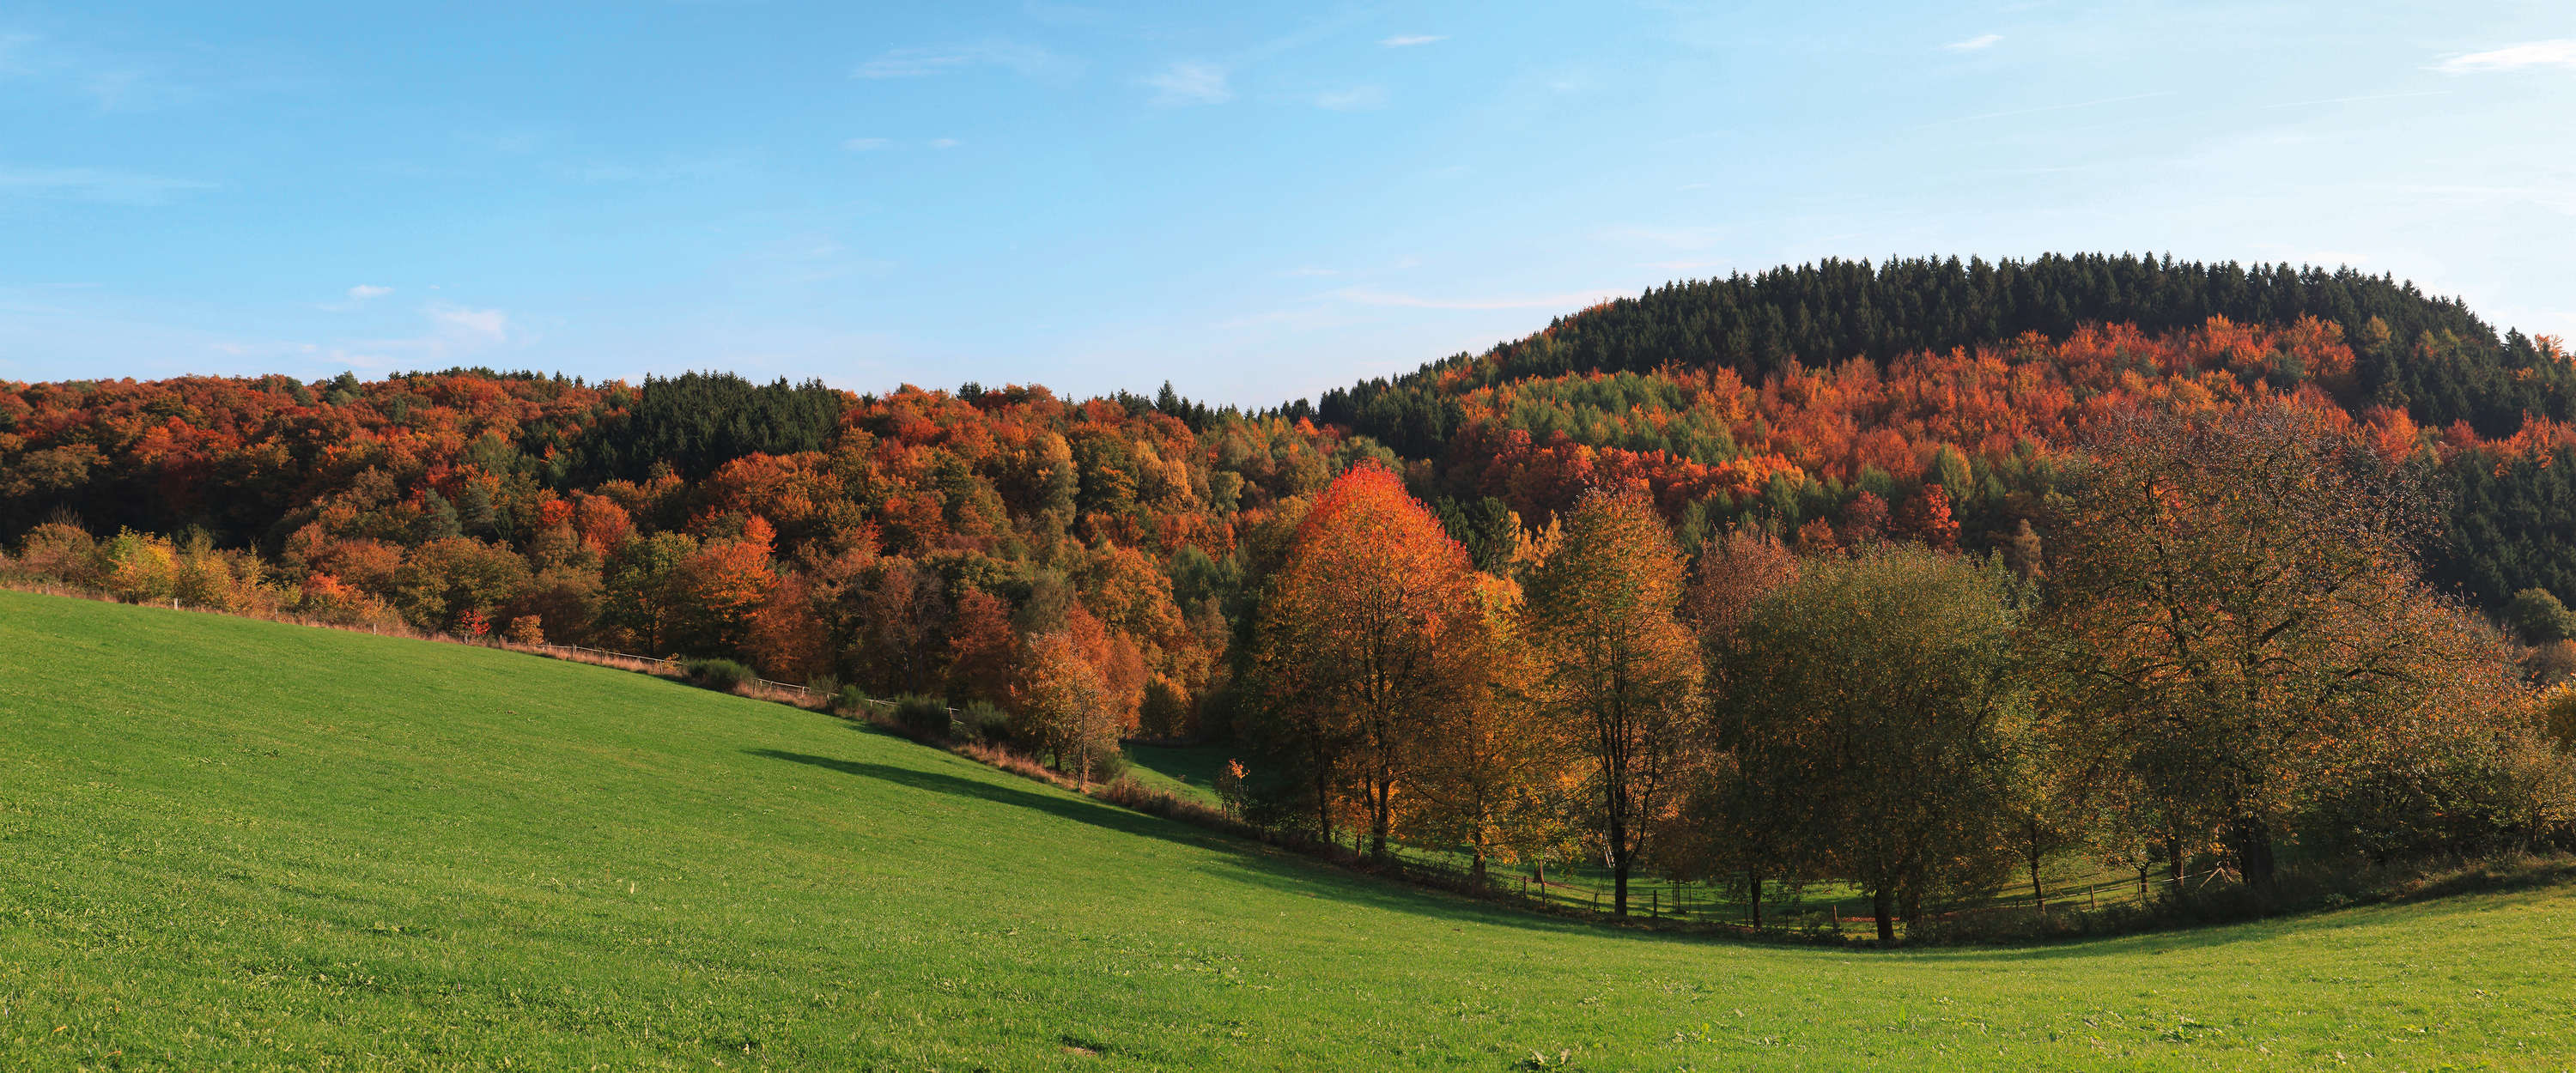             Fototapete Wald & Wiese – Bunter Laubwald im Herbst
        